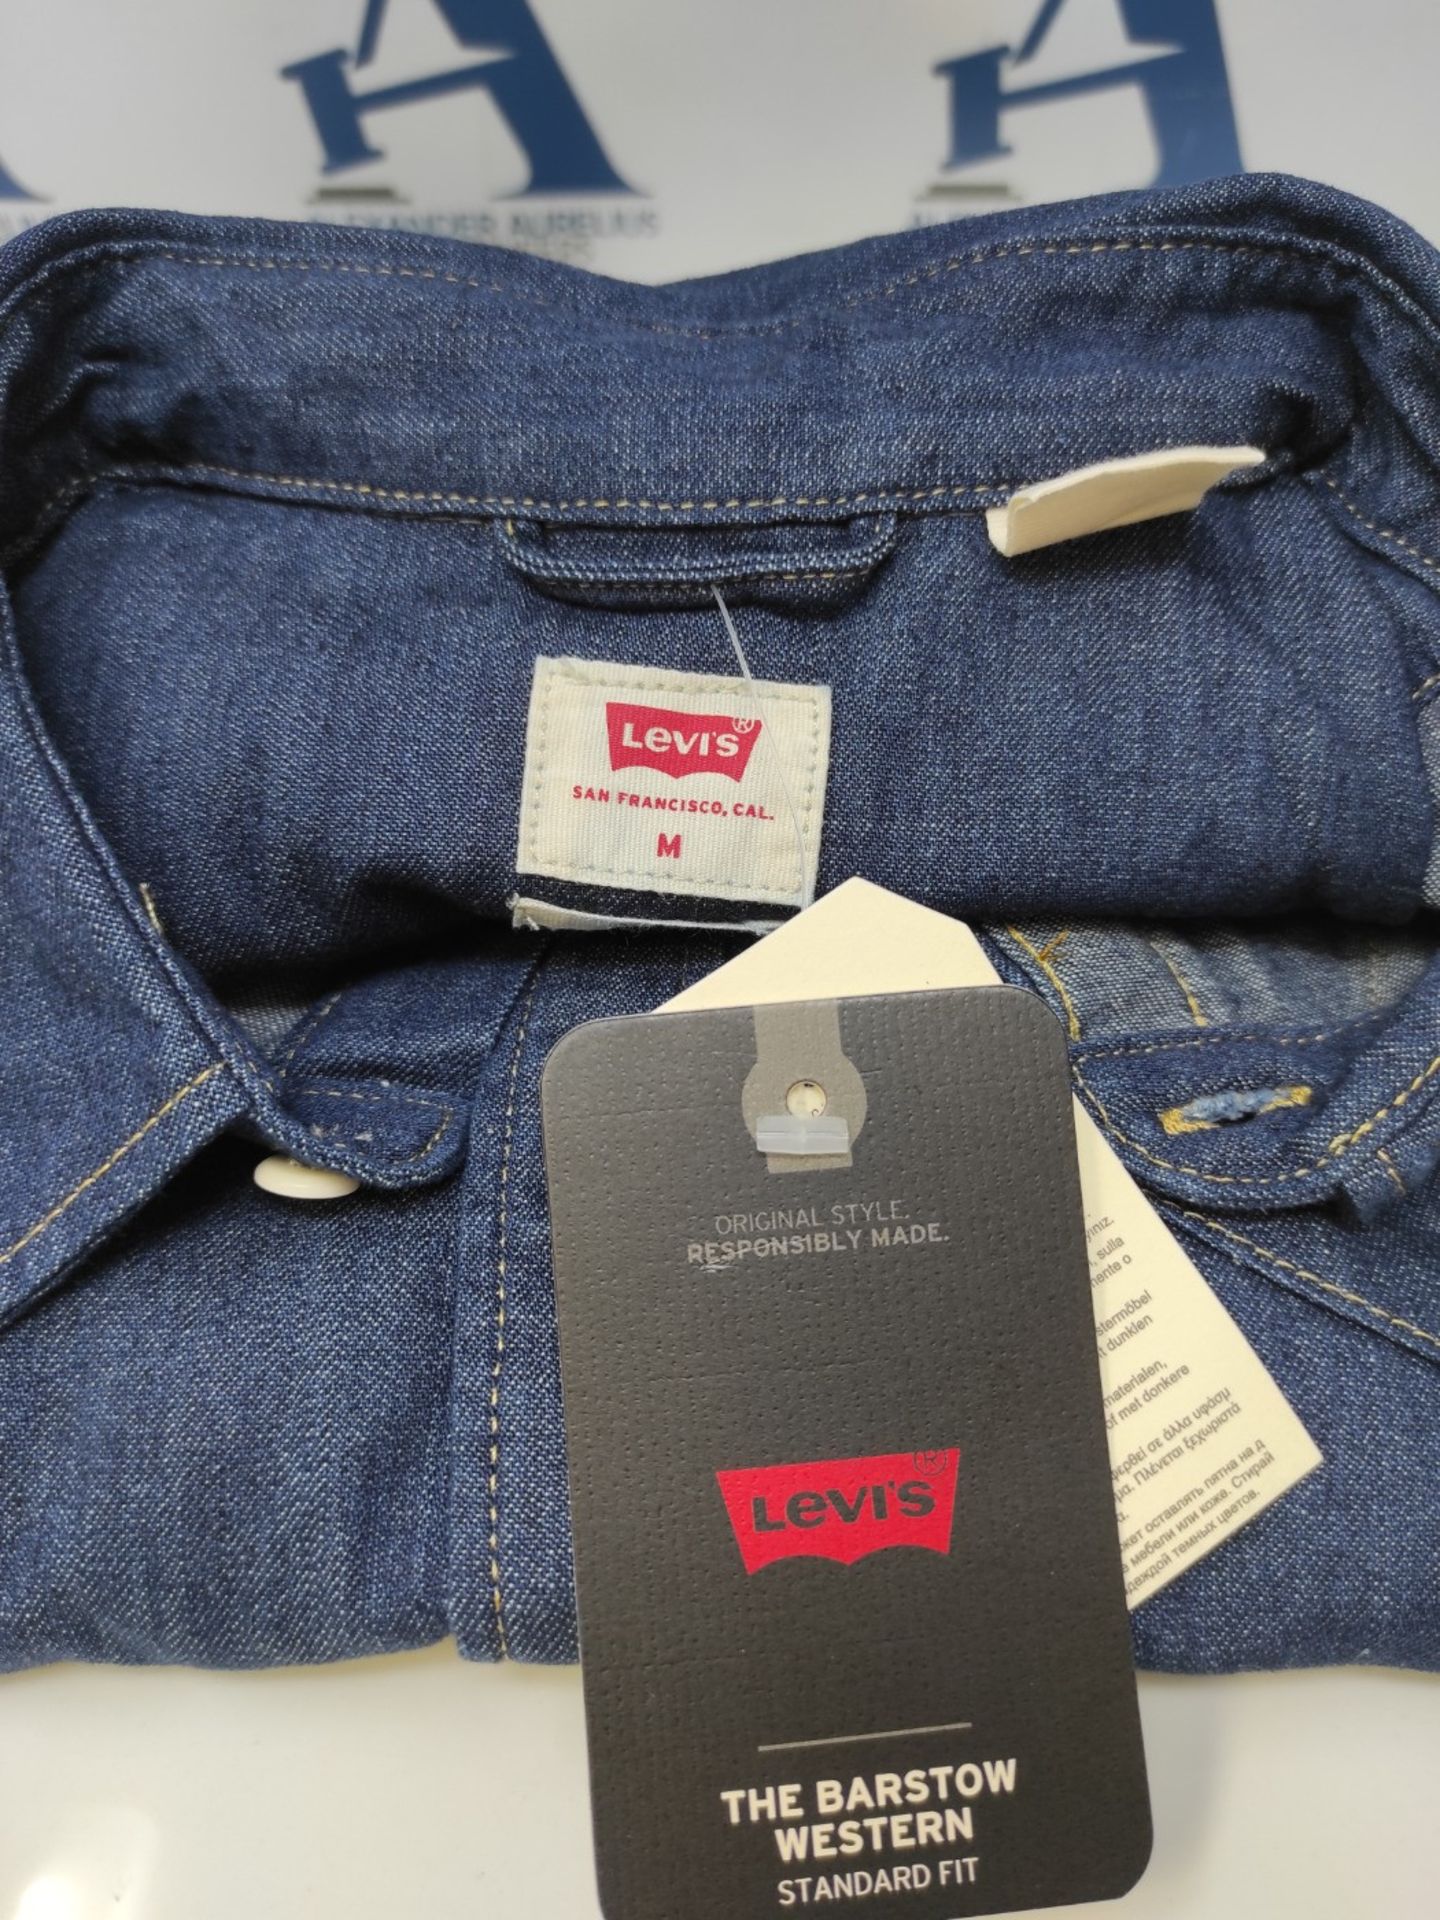 RRP £55.00 Levi's Barstow Western Standard Shirt, Indigo Rinse, Size M Men - Image 3 of 3